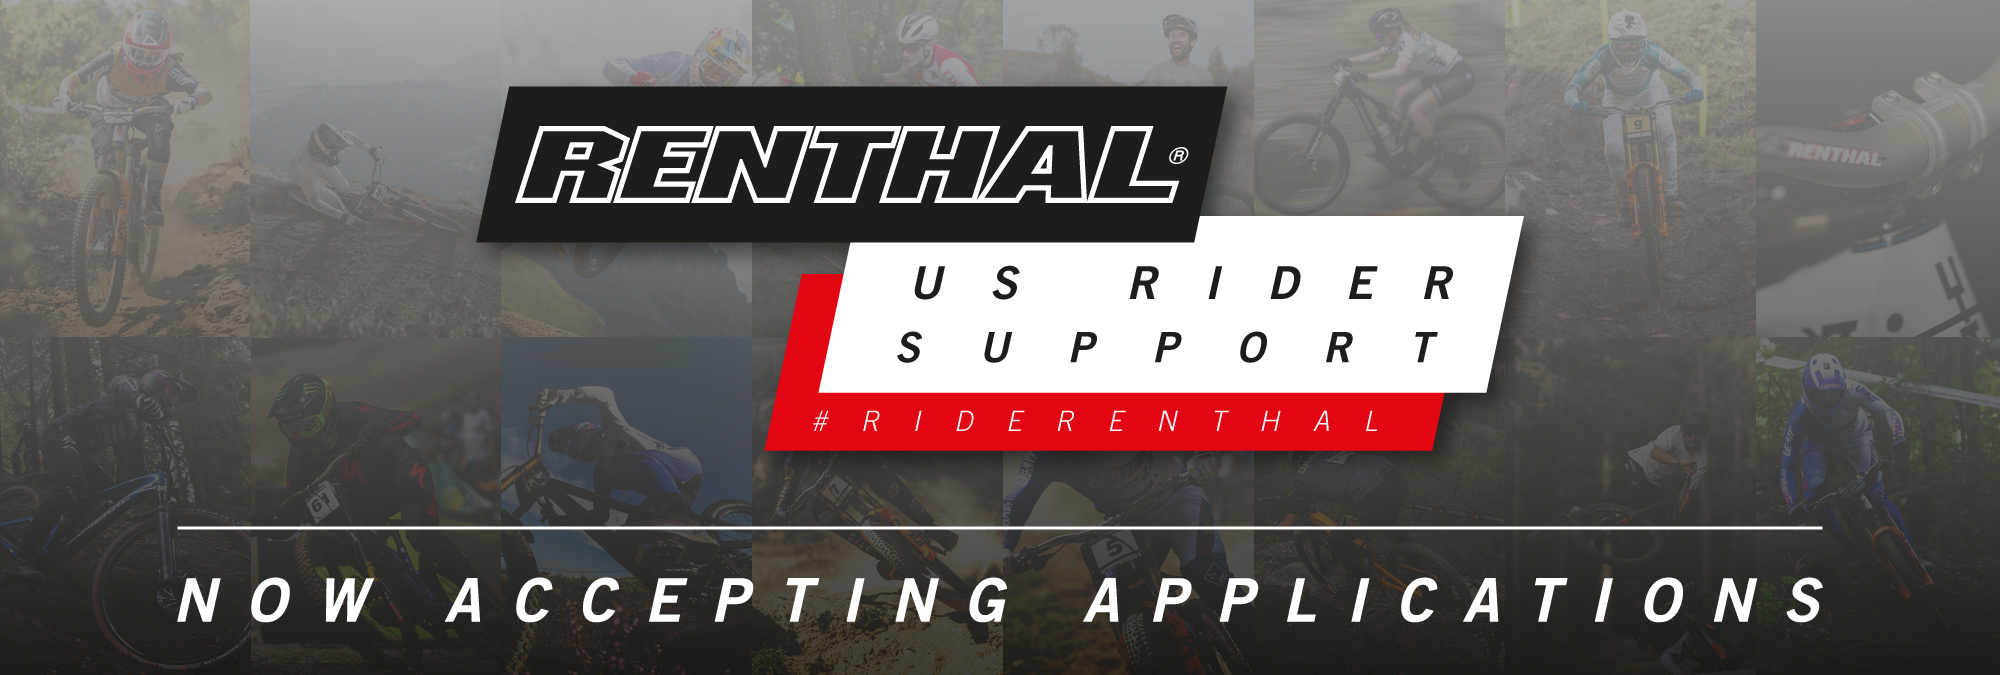 US Rider Support